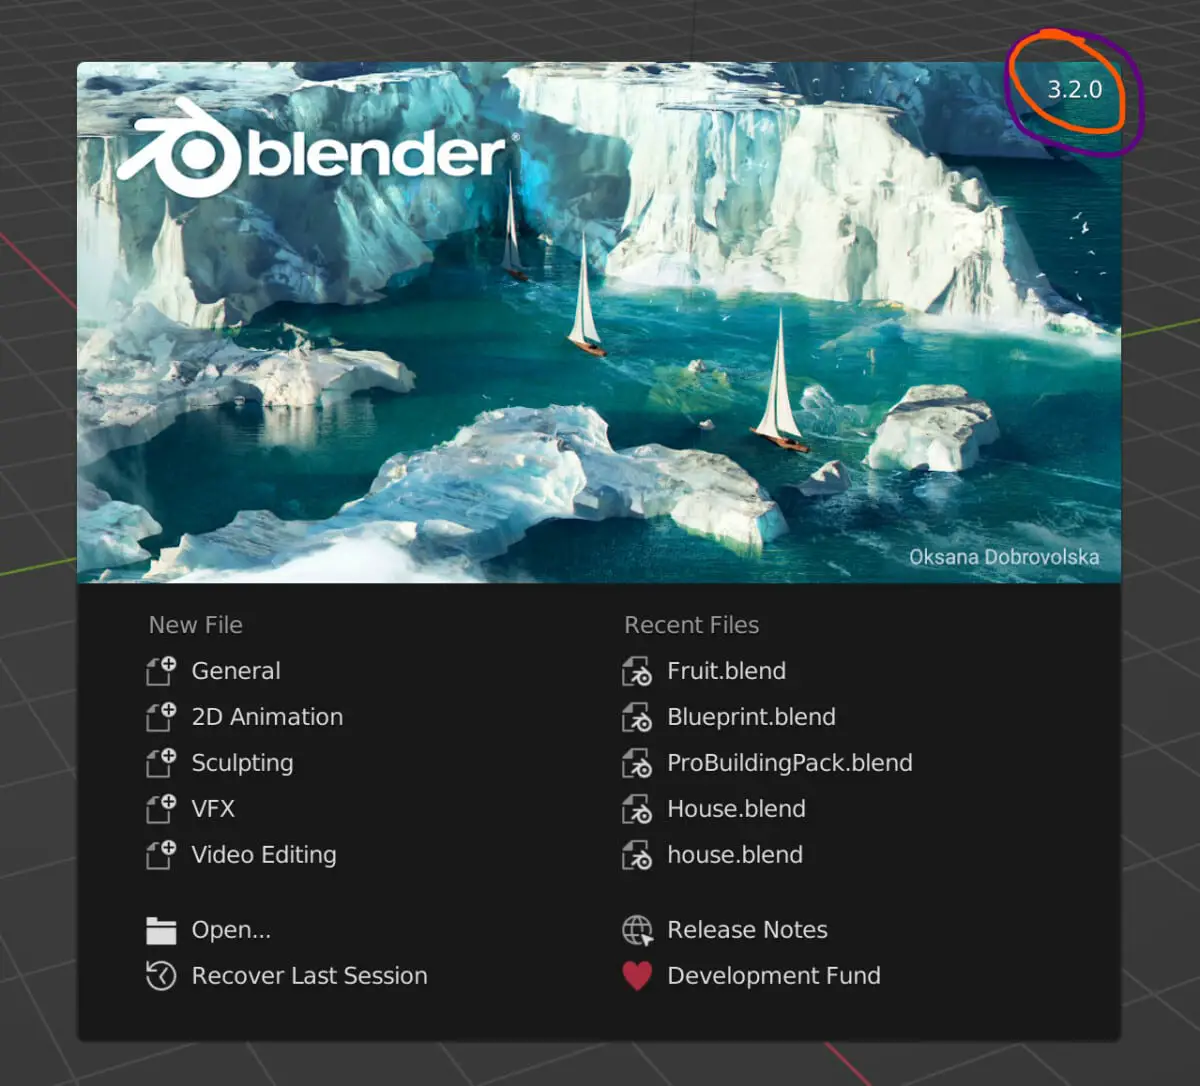 How Do I Update The Blender Software?